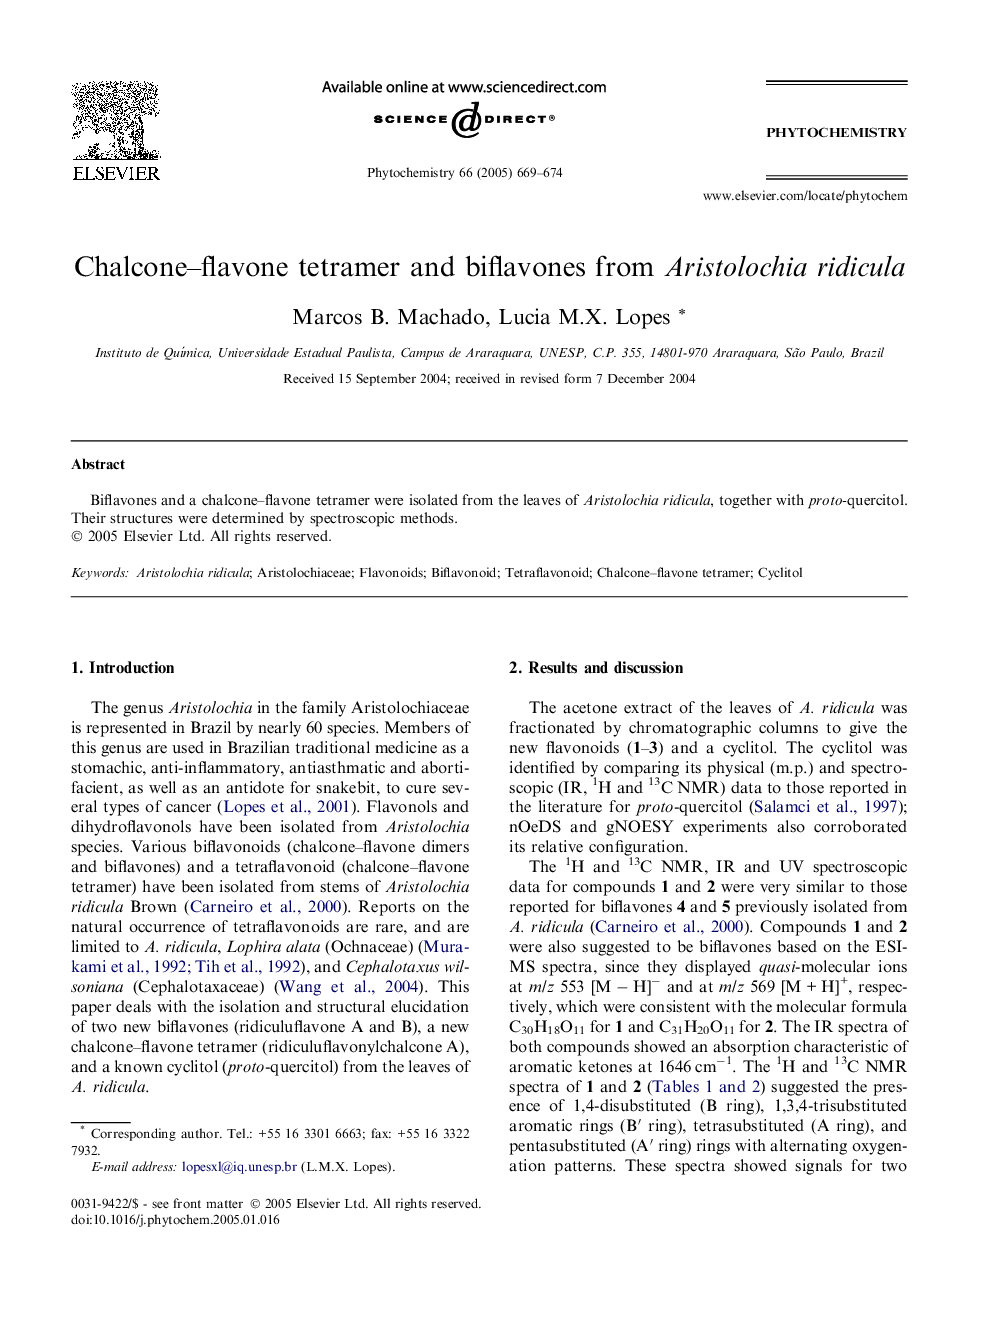 Chalcone-flavone tetramer and biflavones from Aristolochia ridicula